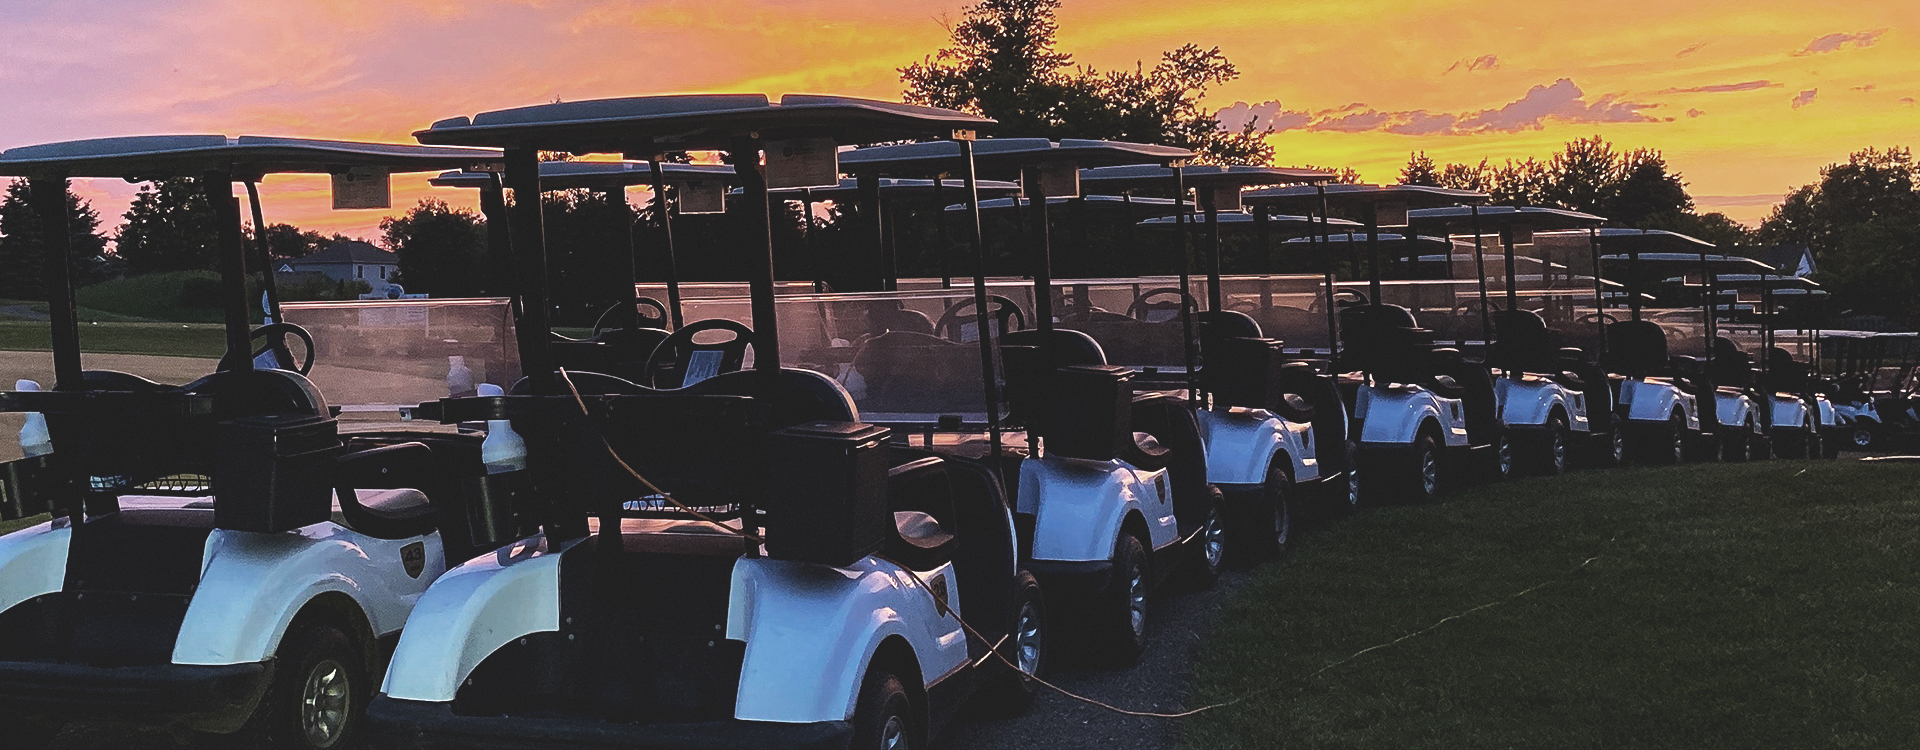 golf course at sunrise golf carts